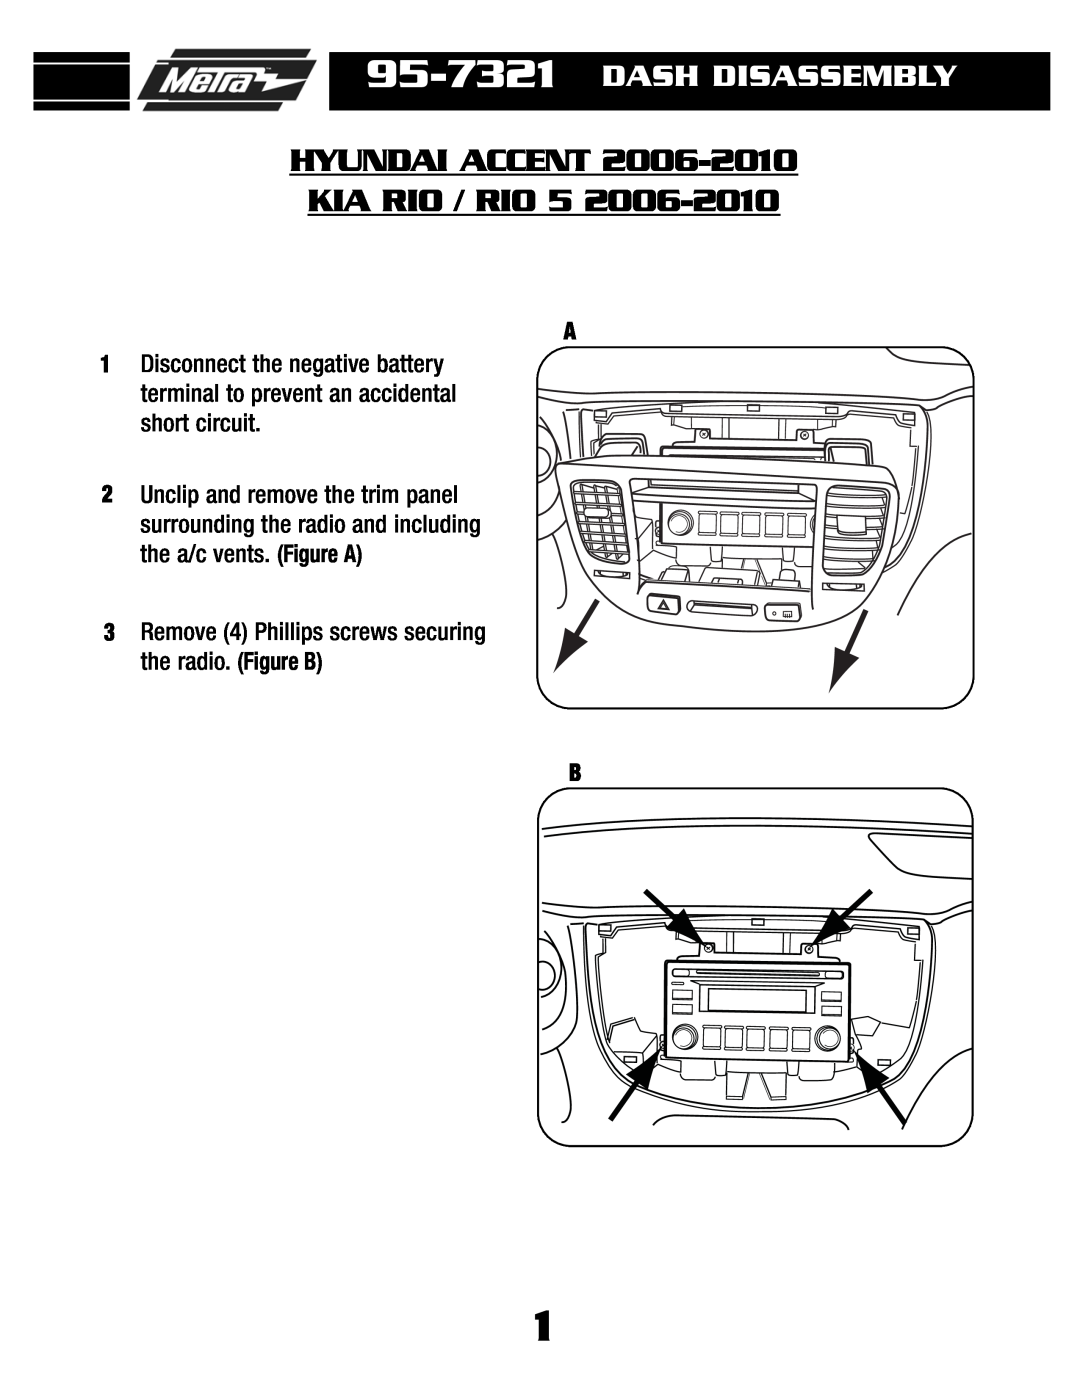 Metra Electronics 95-7321 installation instructions Hyundai Accent Kia Rio / Rio, Dash Disassembly 